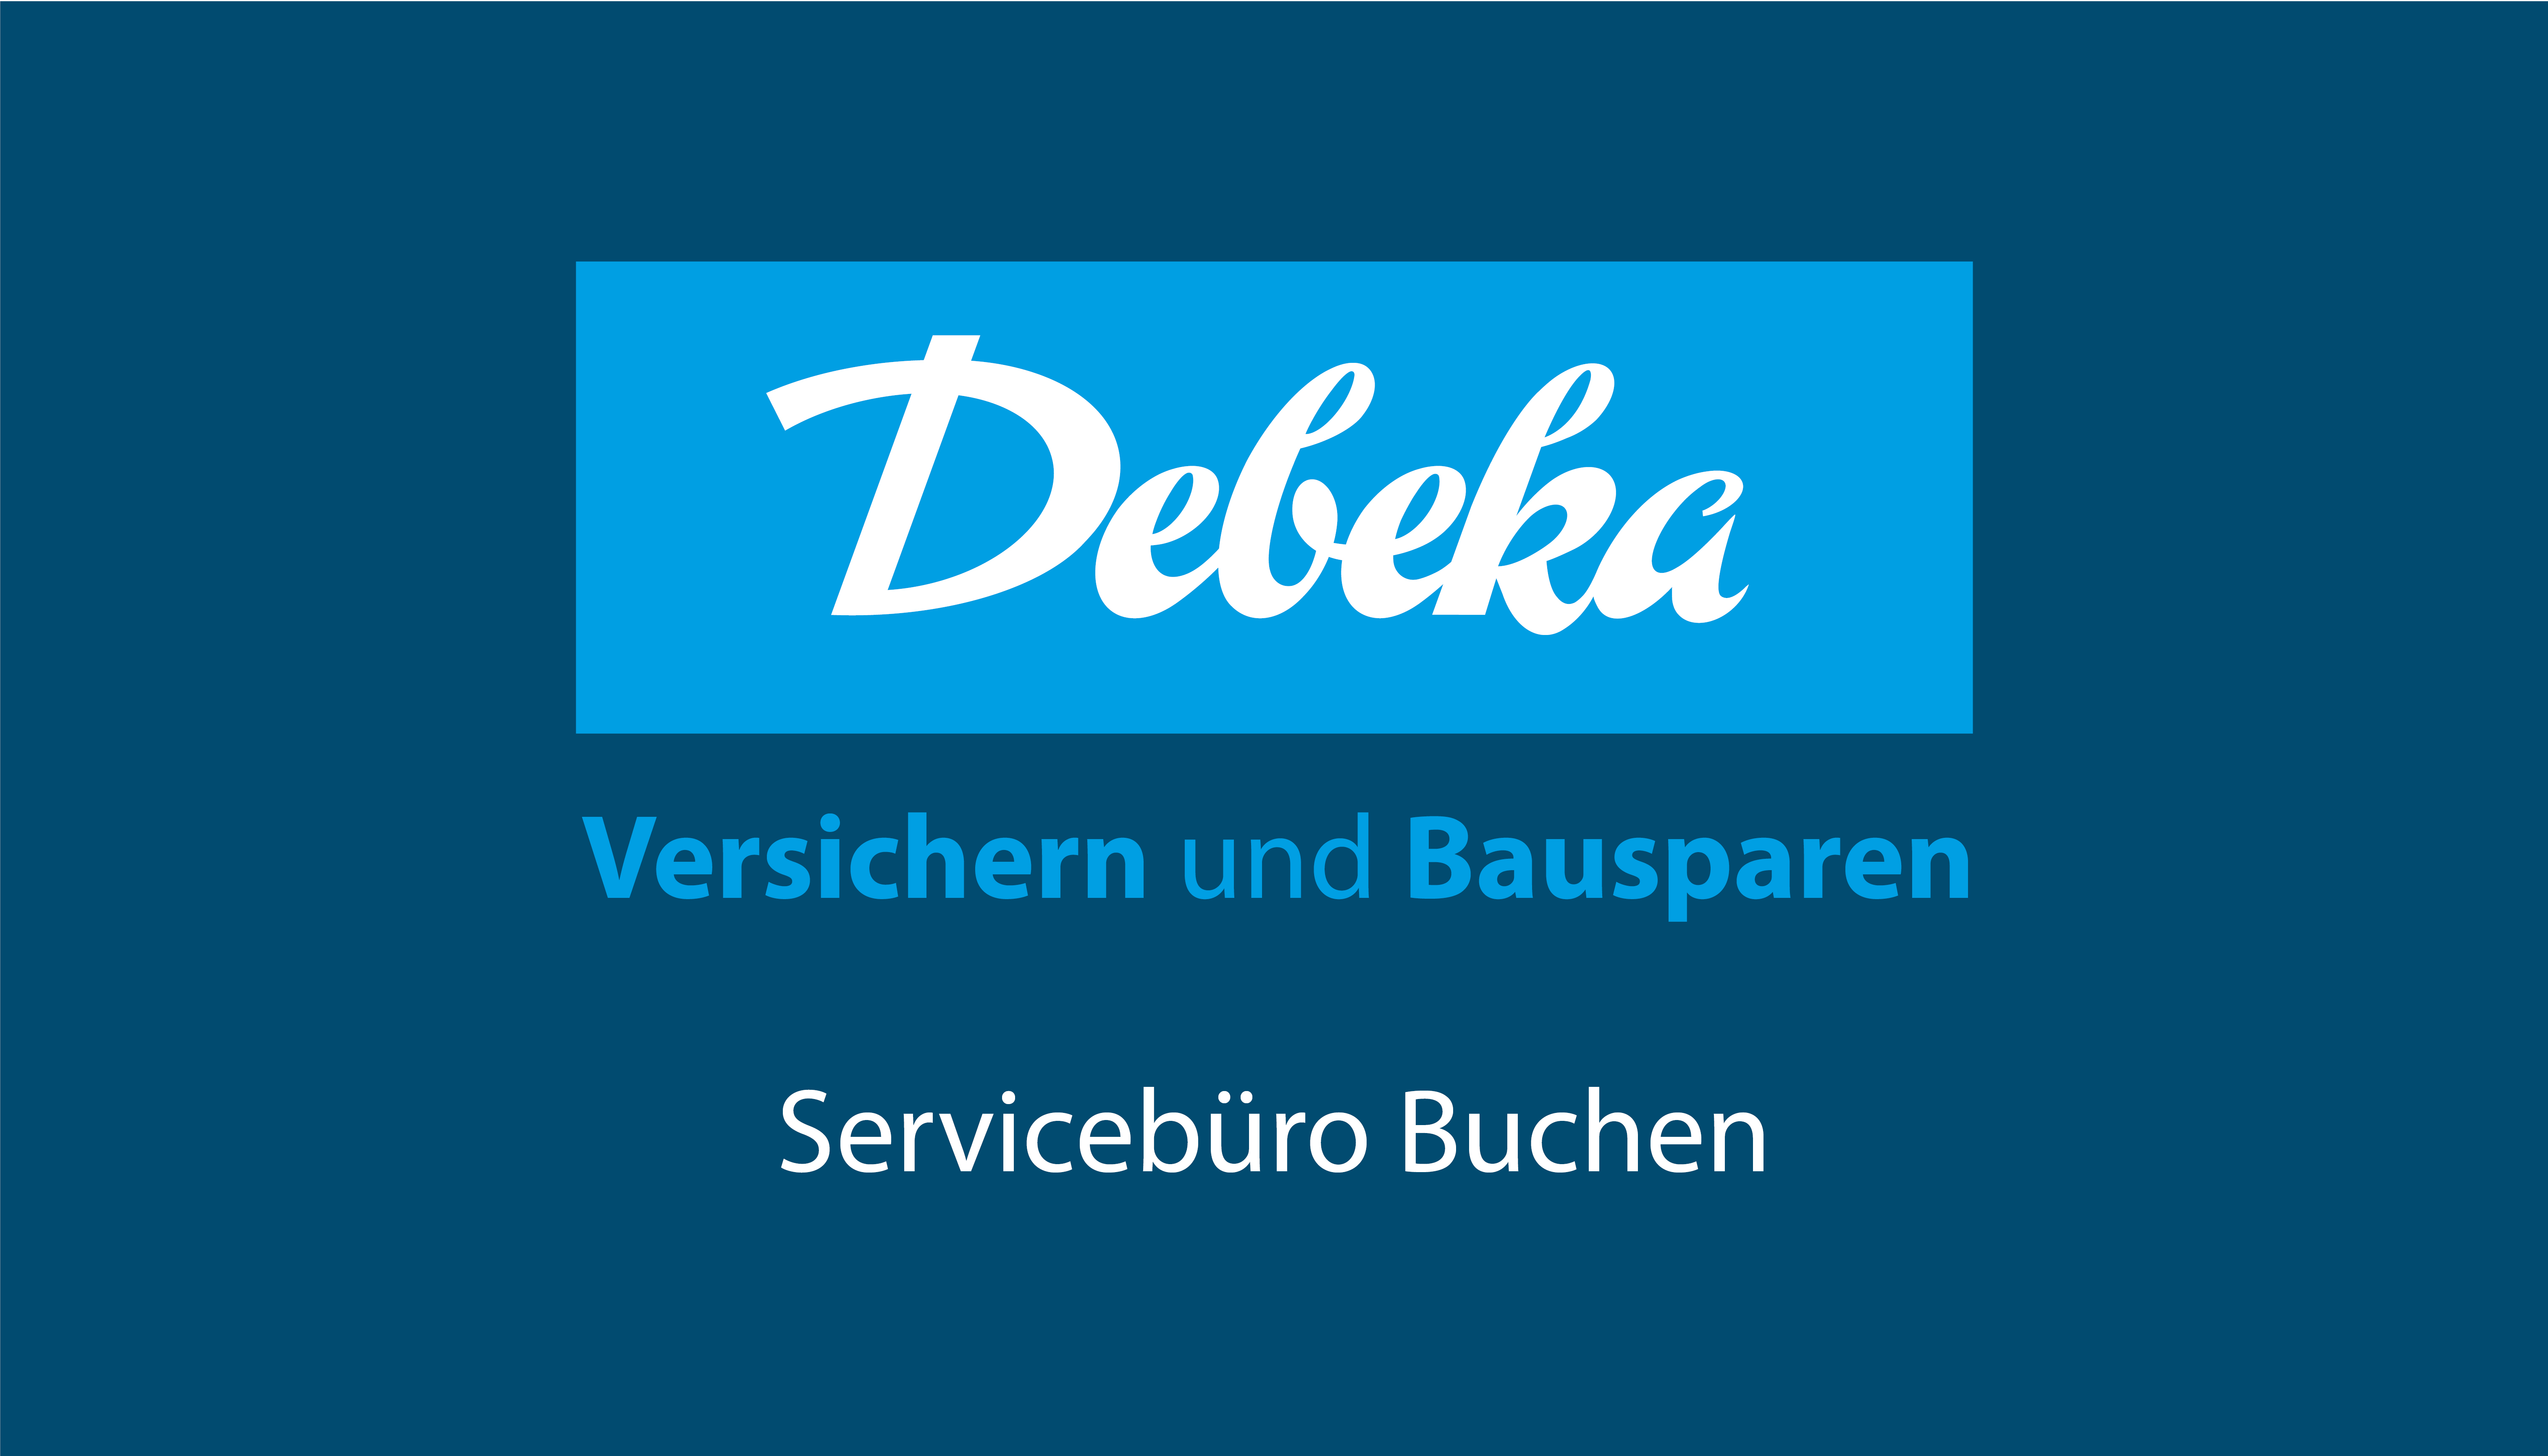 Debeka Servicebro Buchen 2.jpg - 1,94 MB